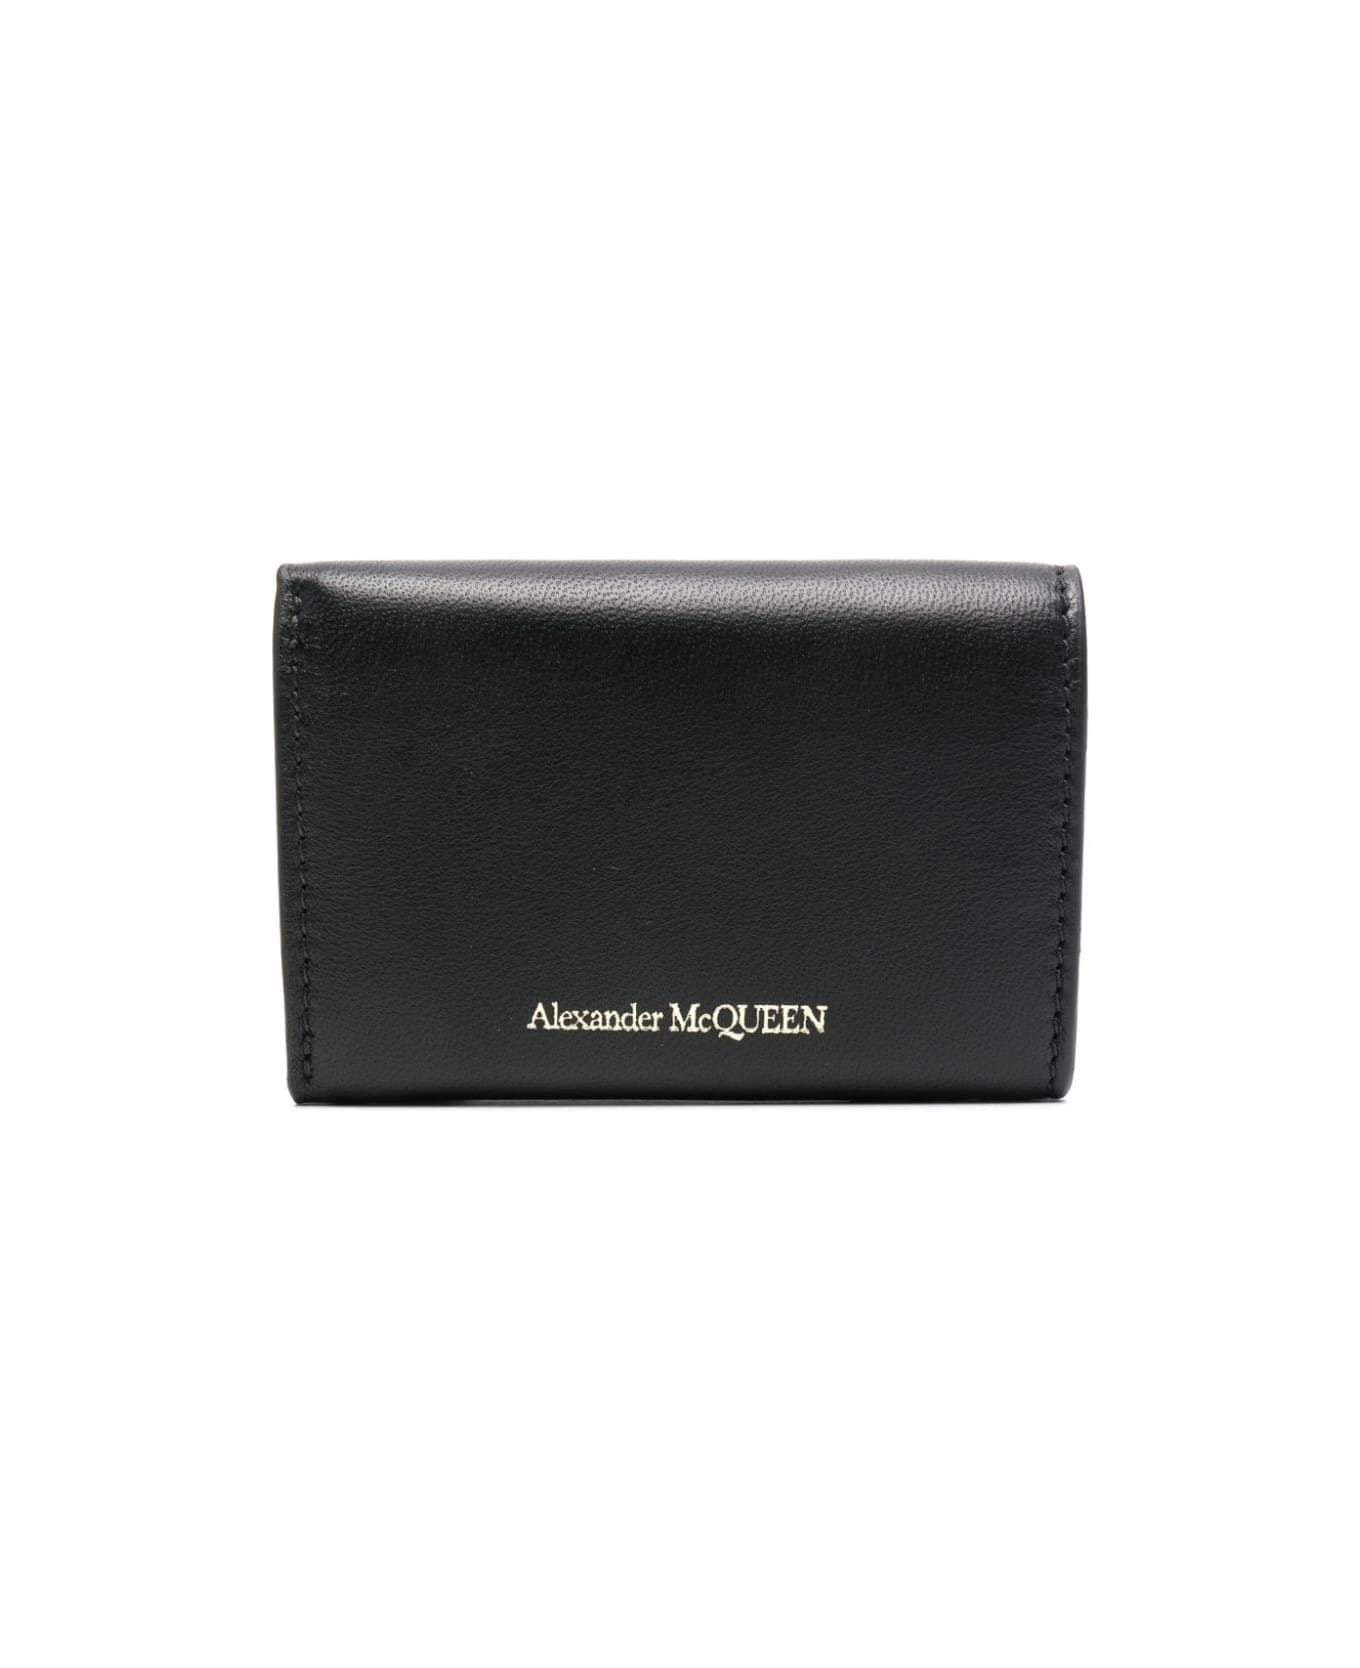 Alexander McQueen Seal Card Holder In Black - Black 財布